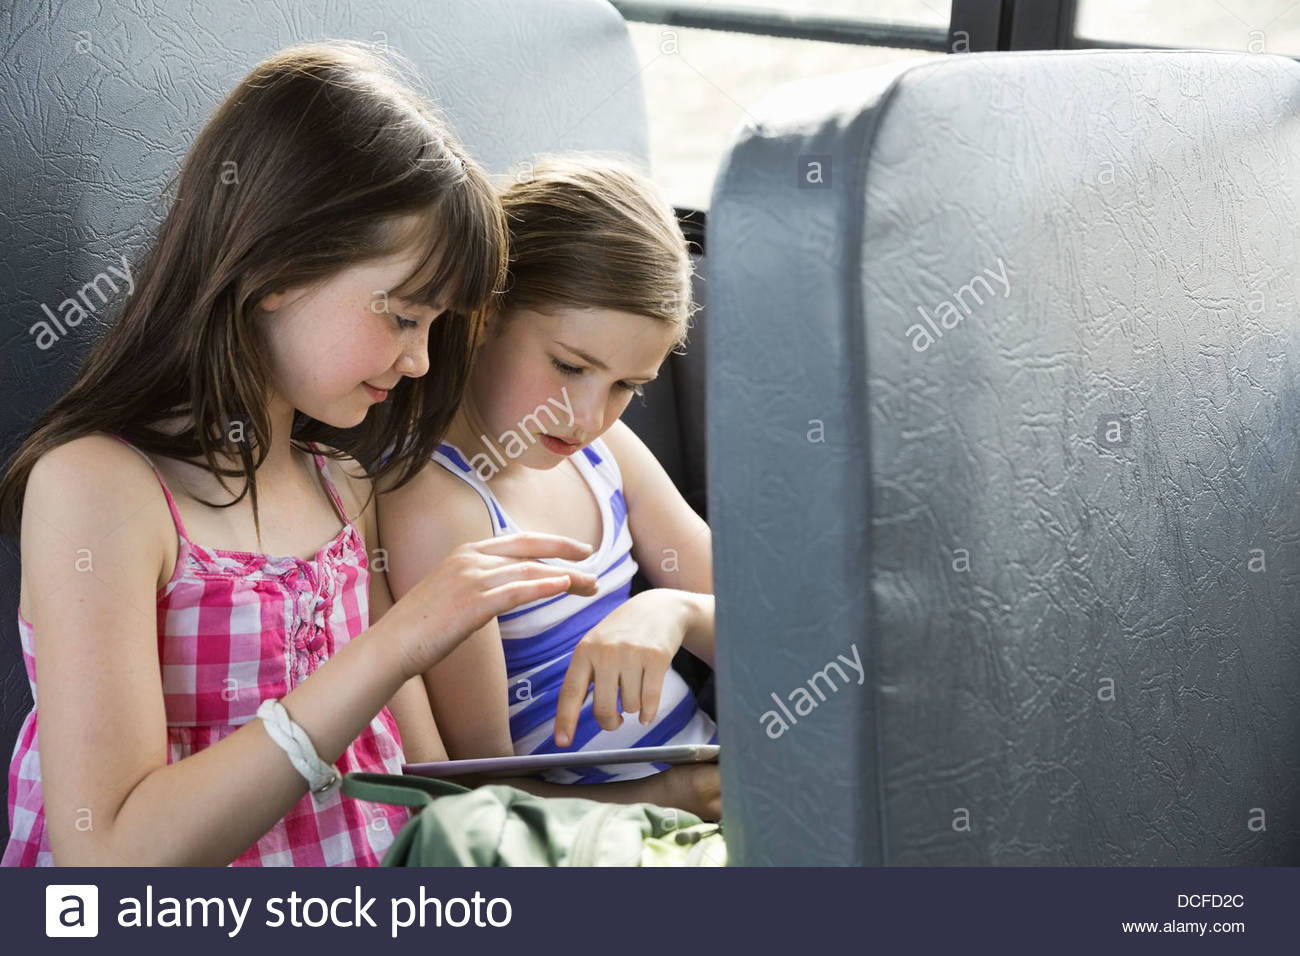 Little girls using digital tablet in school bus Stock Photo